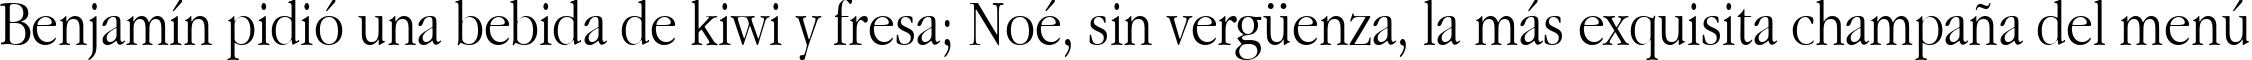 Пример написания шрифтом Apple Garamond Light текста на испанском